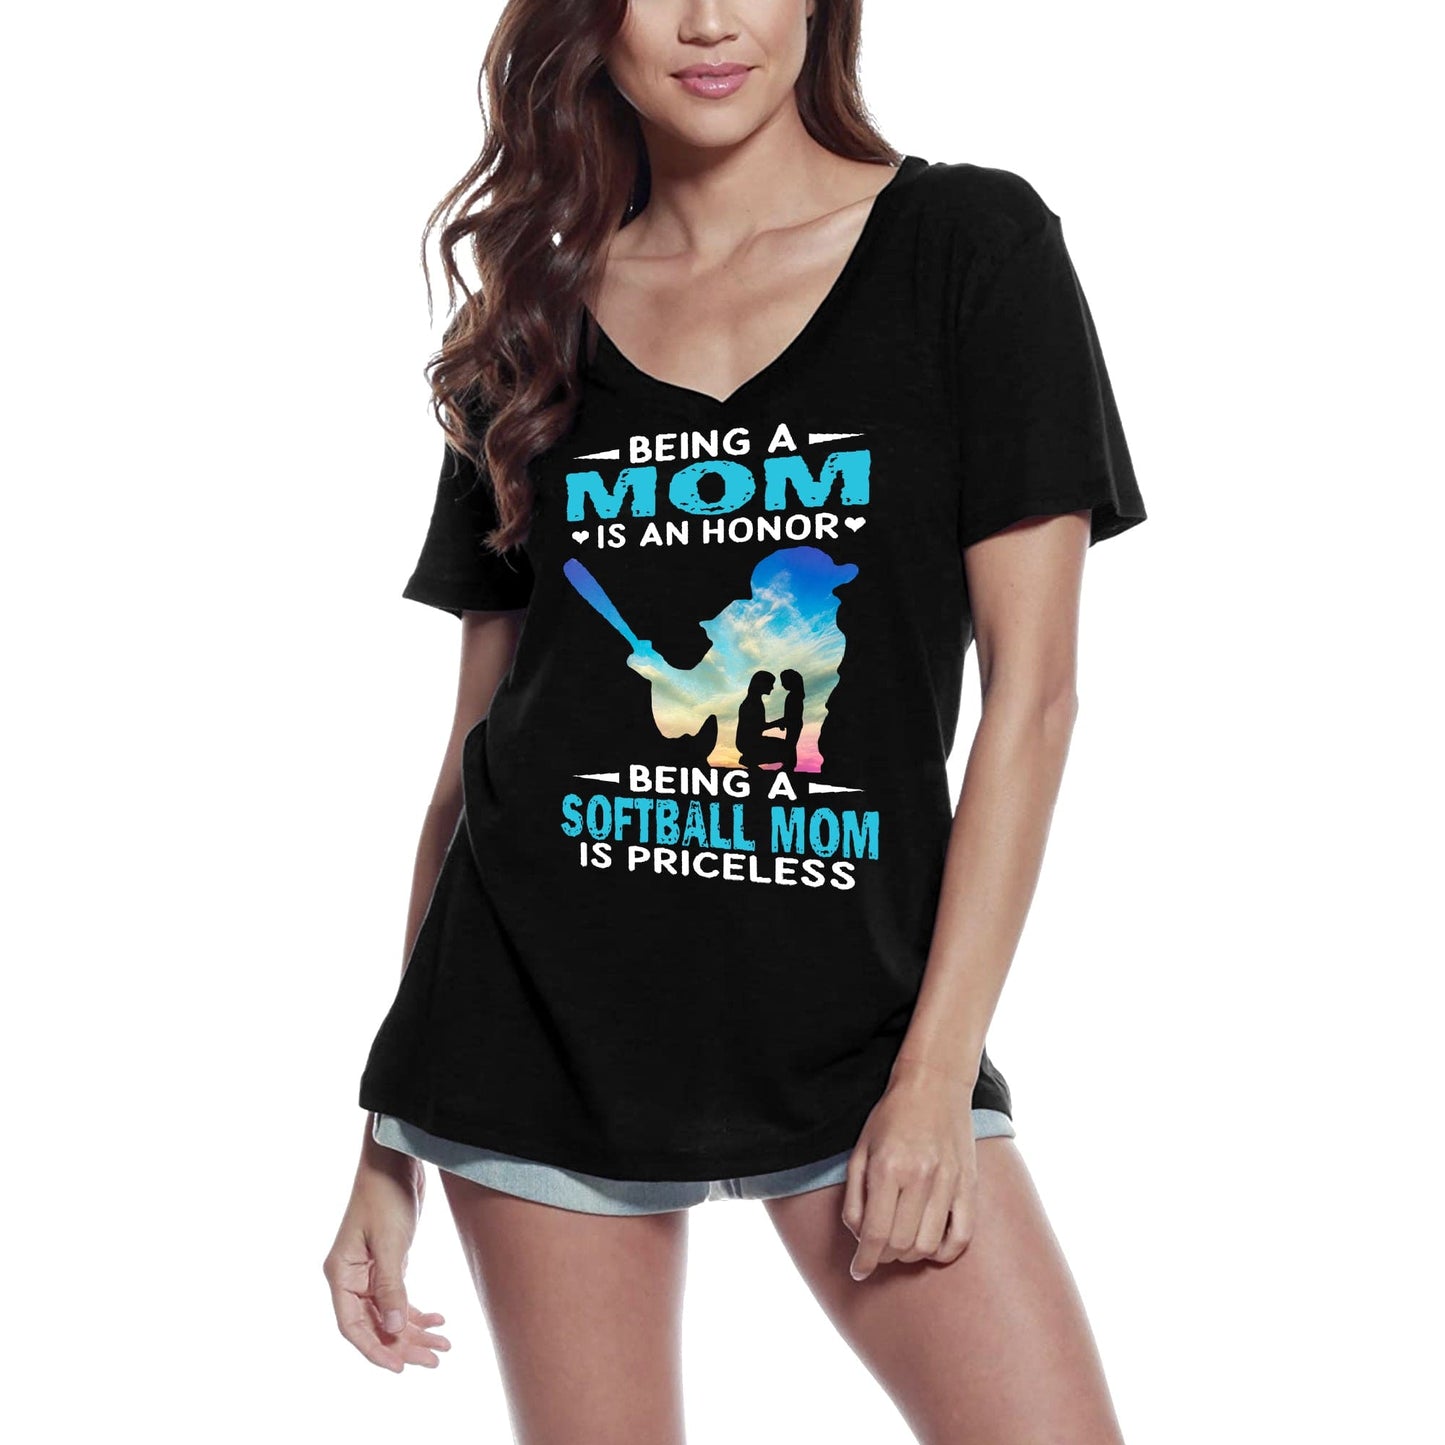 ULTRABASIC Women's T-Shirt Being a Softball Mom is Priceless - Funny Sport Mother Tee Shirt